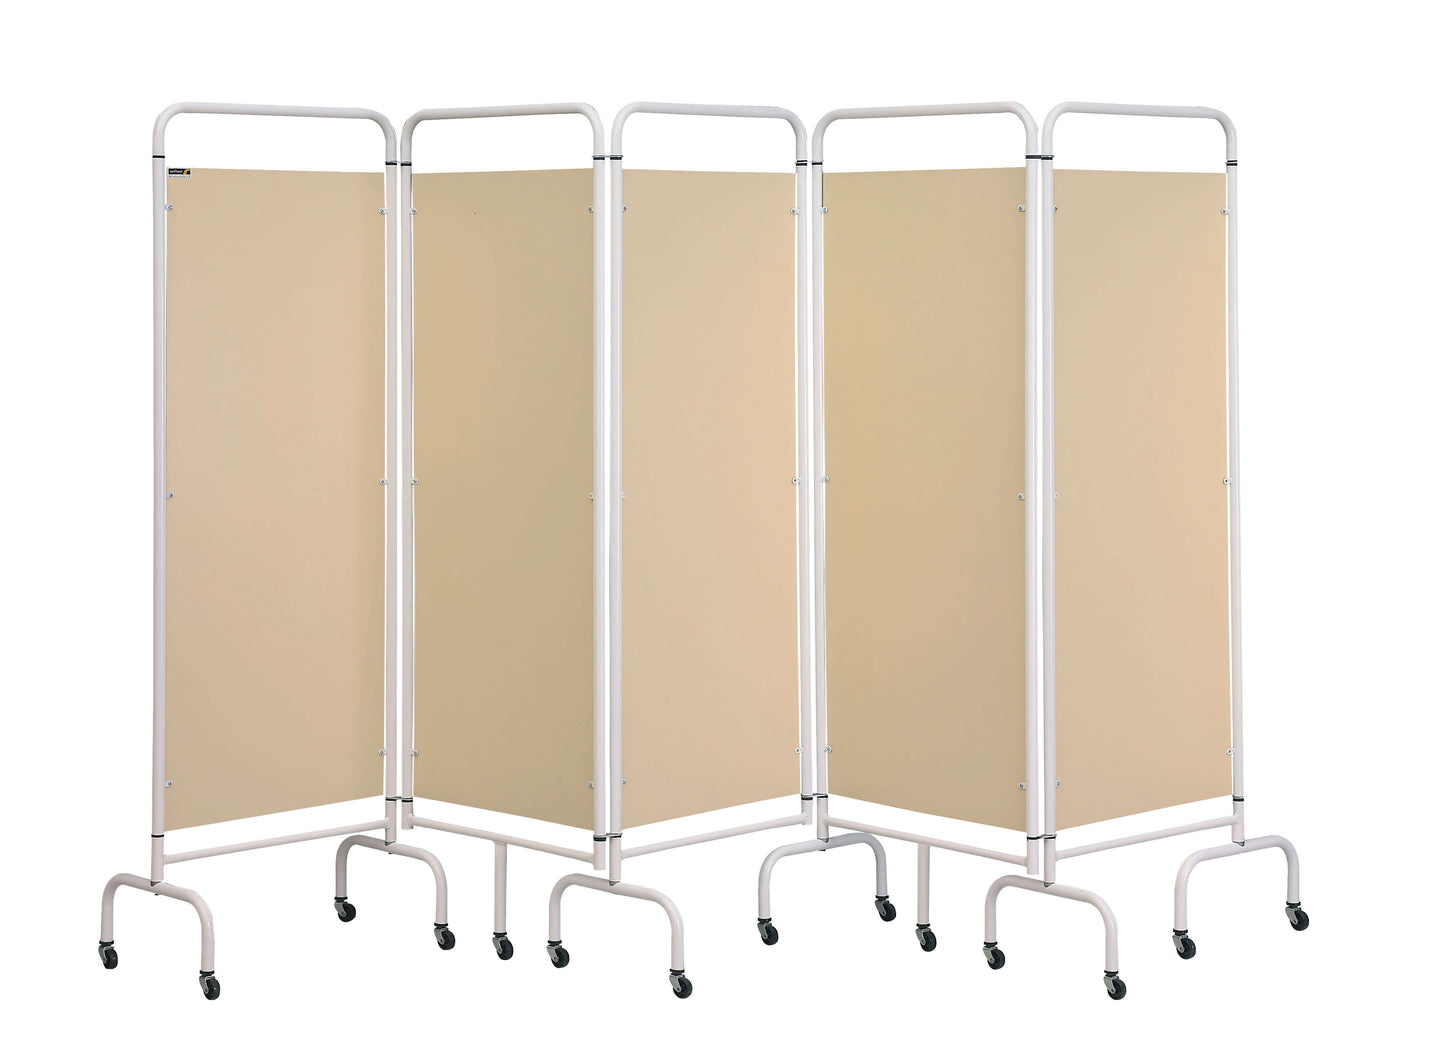 Sunflower - 5 Panel Mobile Folding Hospital Ward Screen